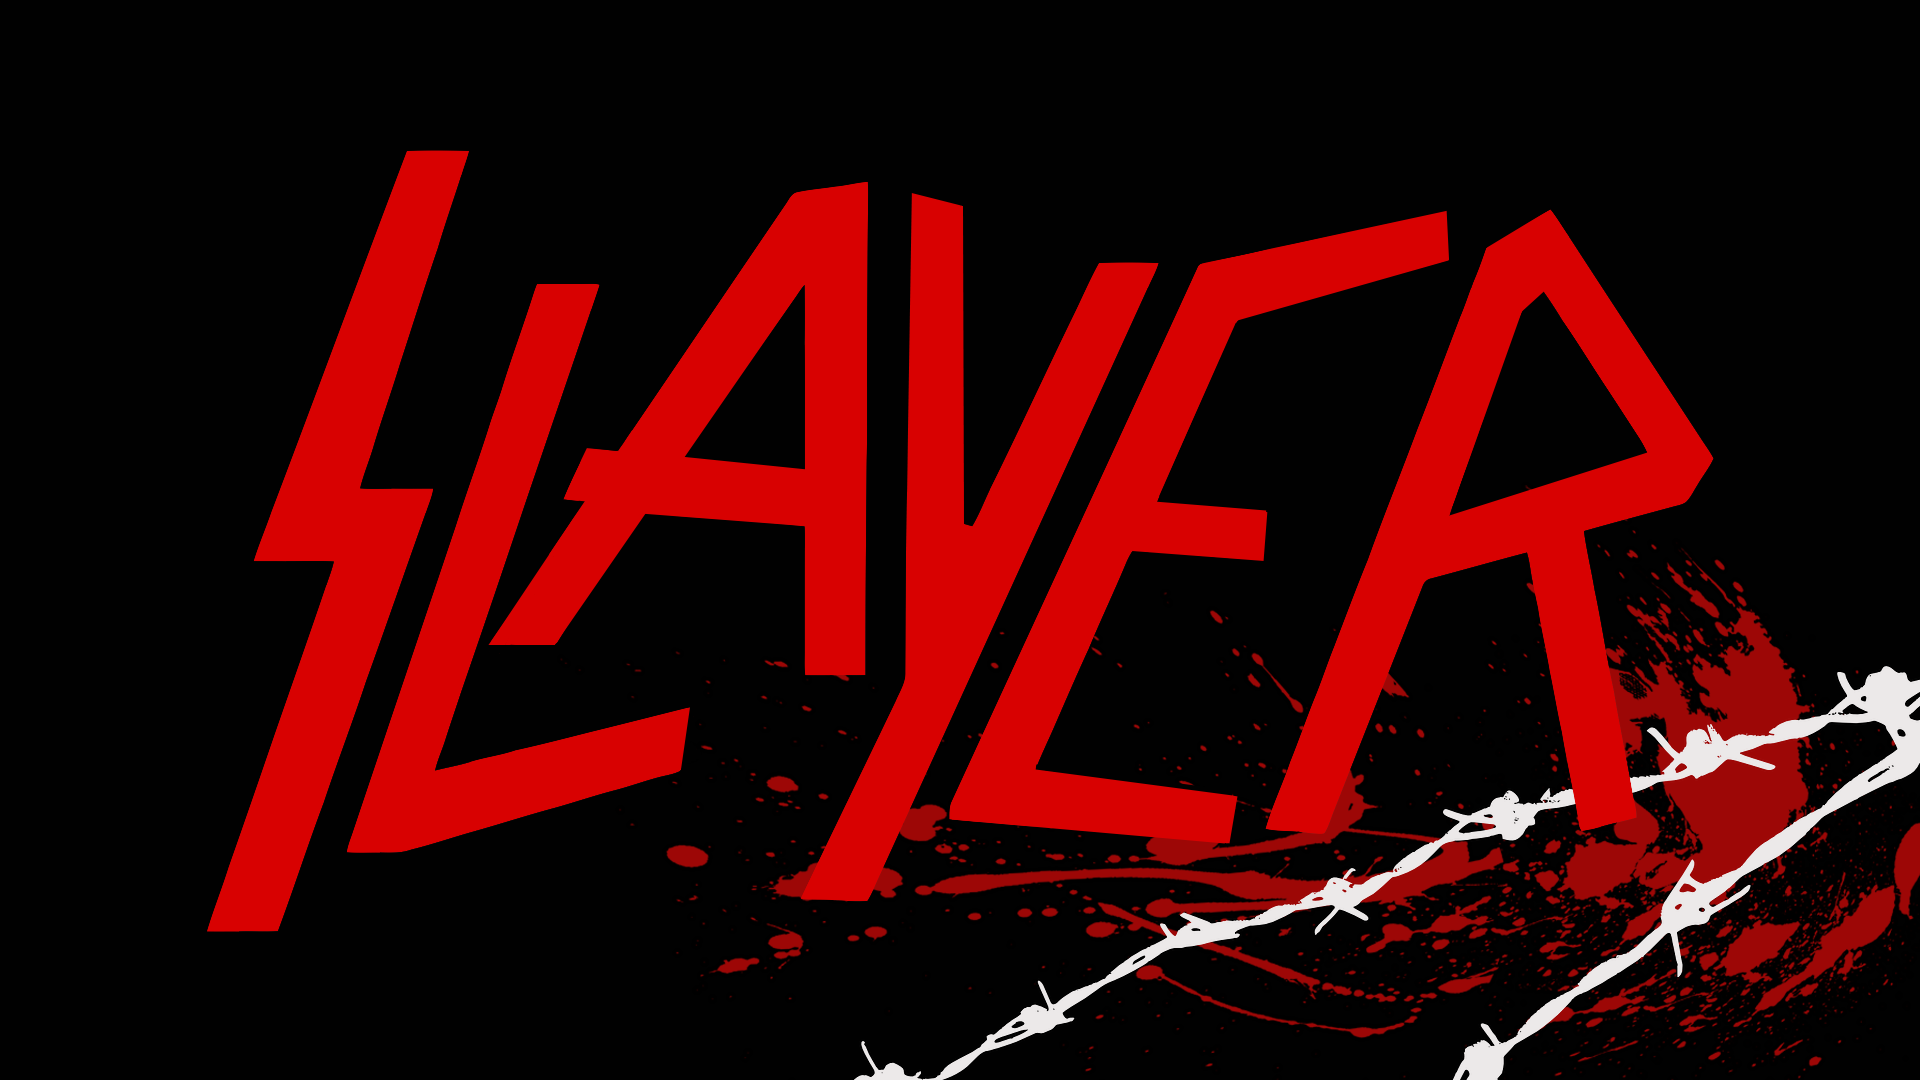 Slayer Wallpaper by BR1AN996 on DeviantArt